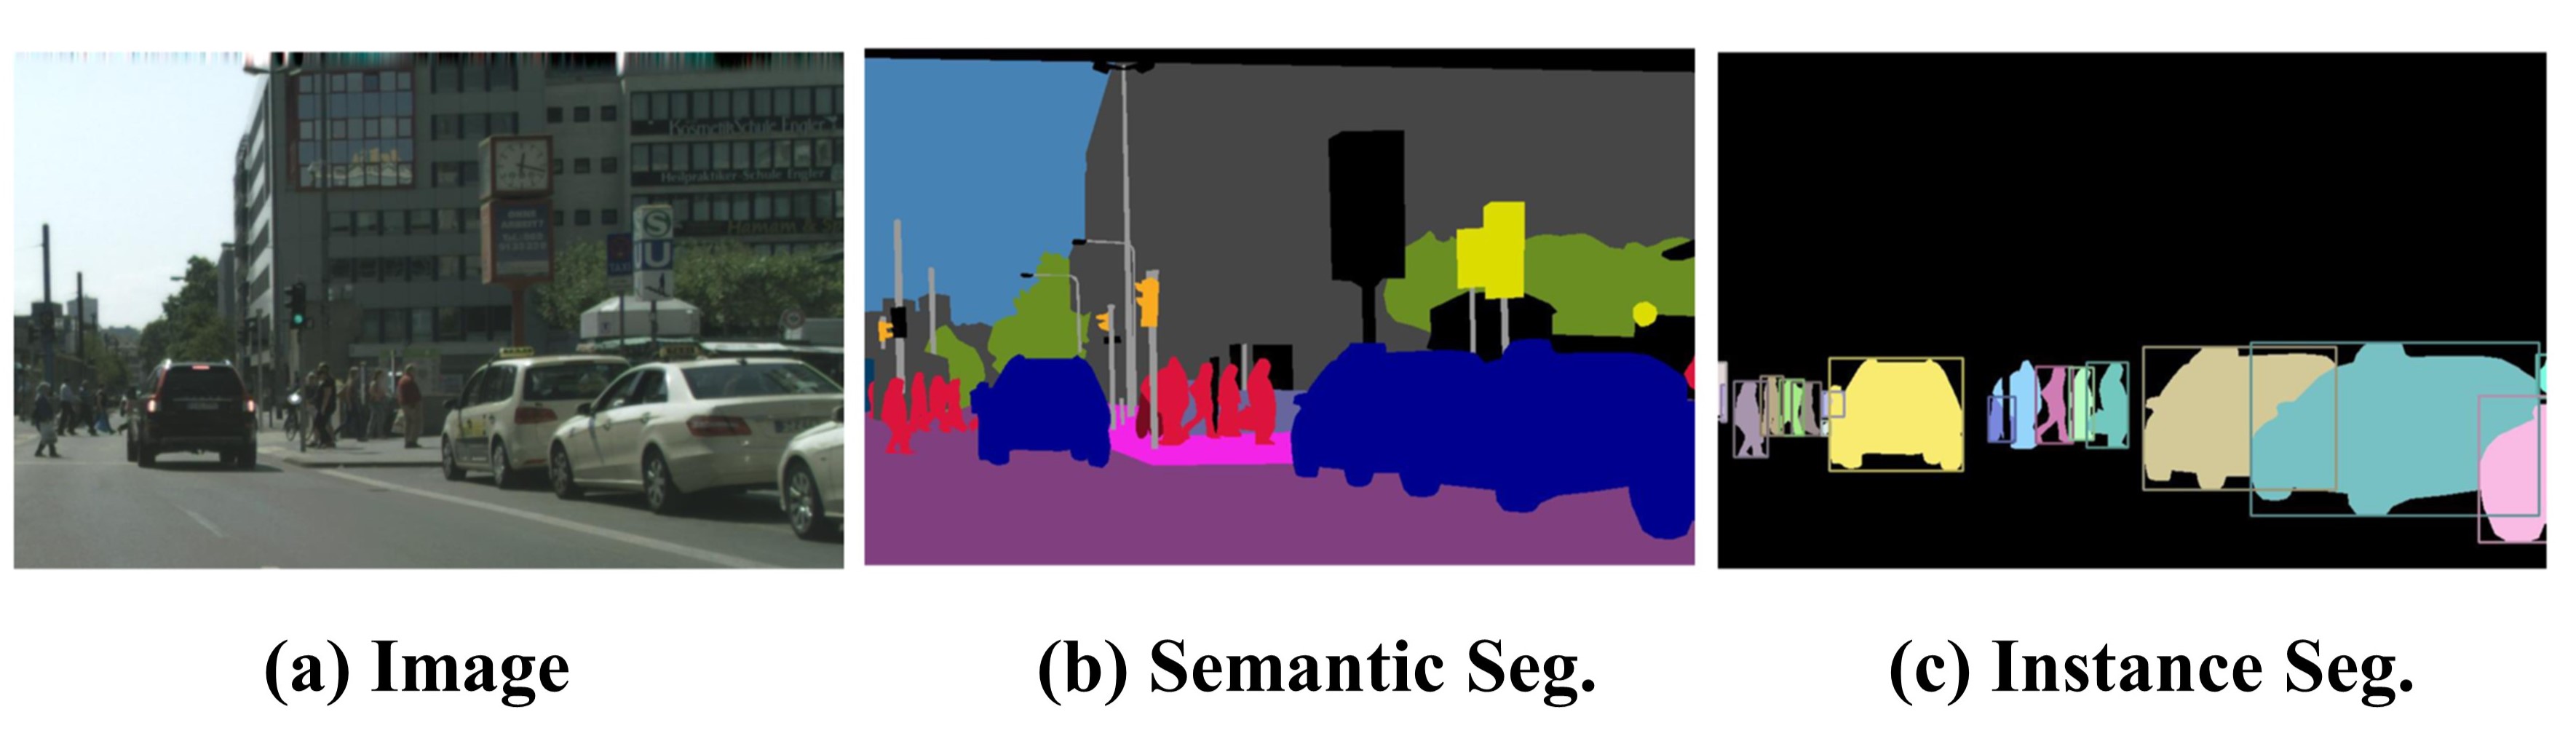 Semantic segmentation